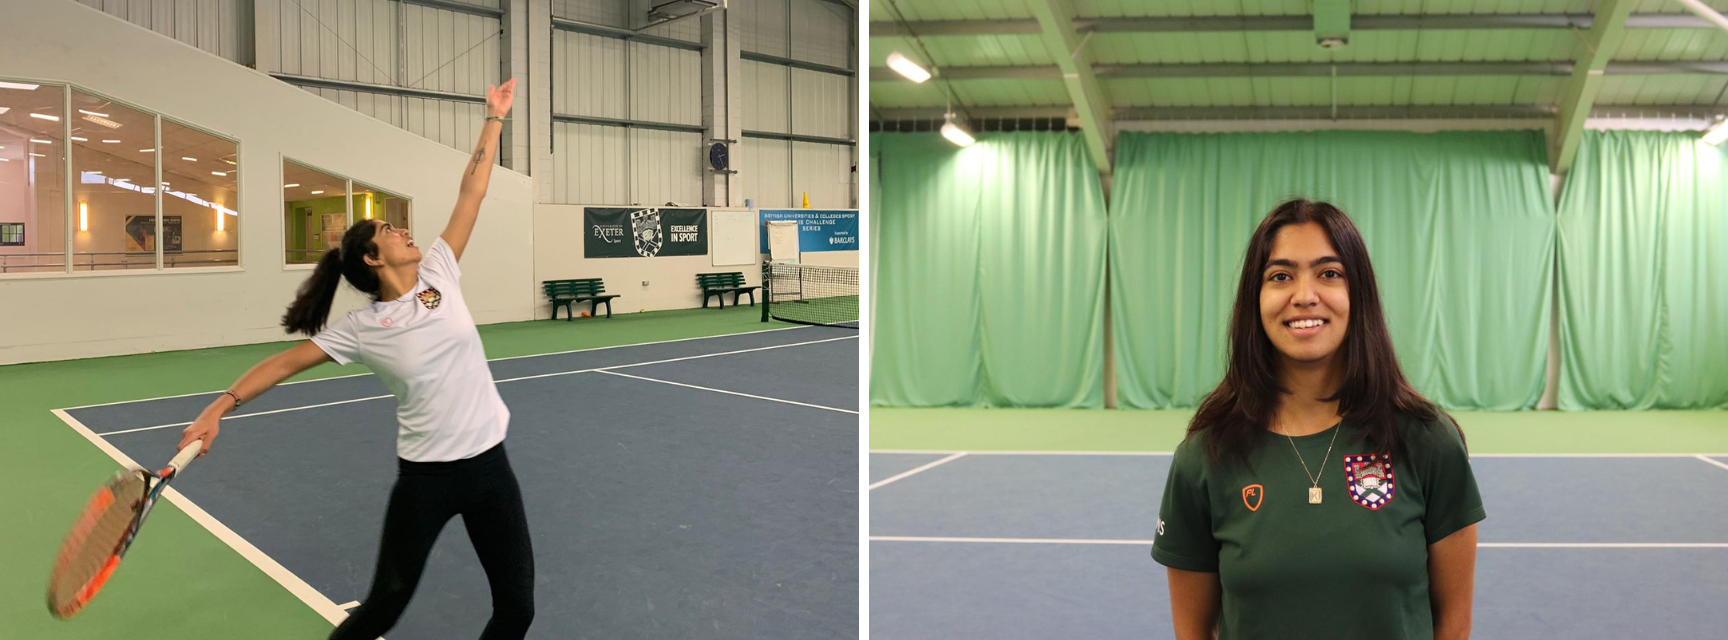 Image of Sneha Kotecha playing tennis and a profile image of Sneha Kotecha